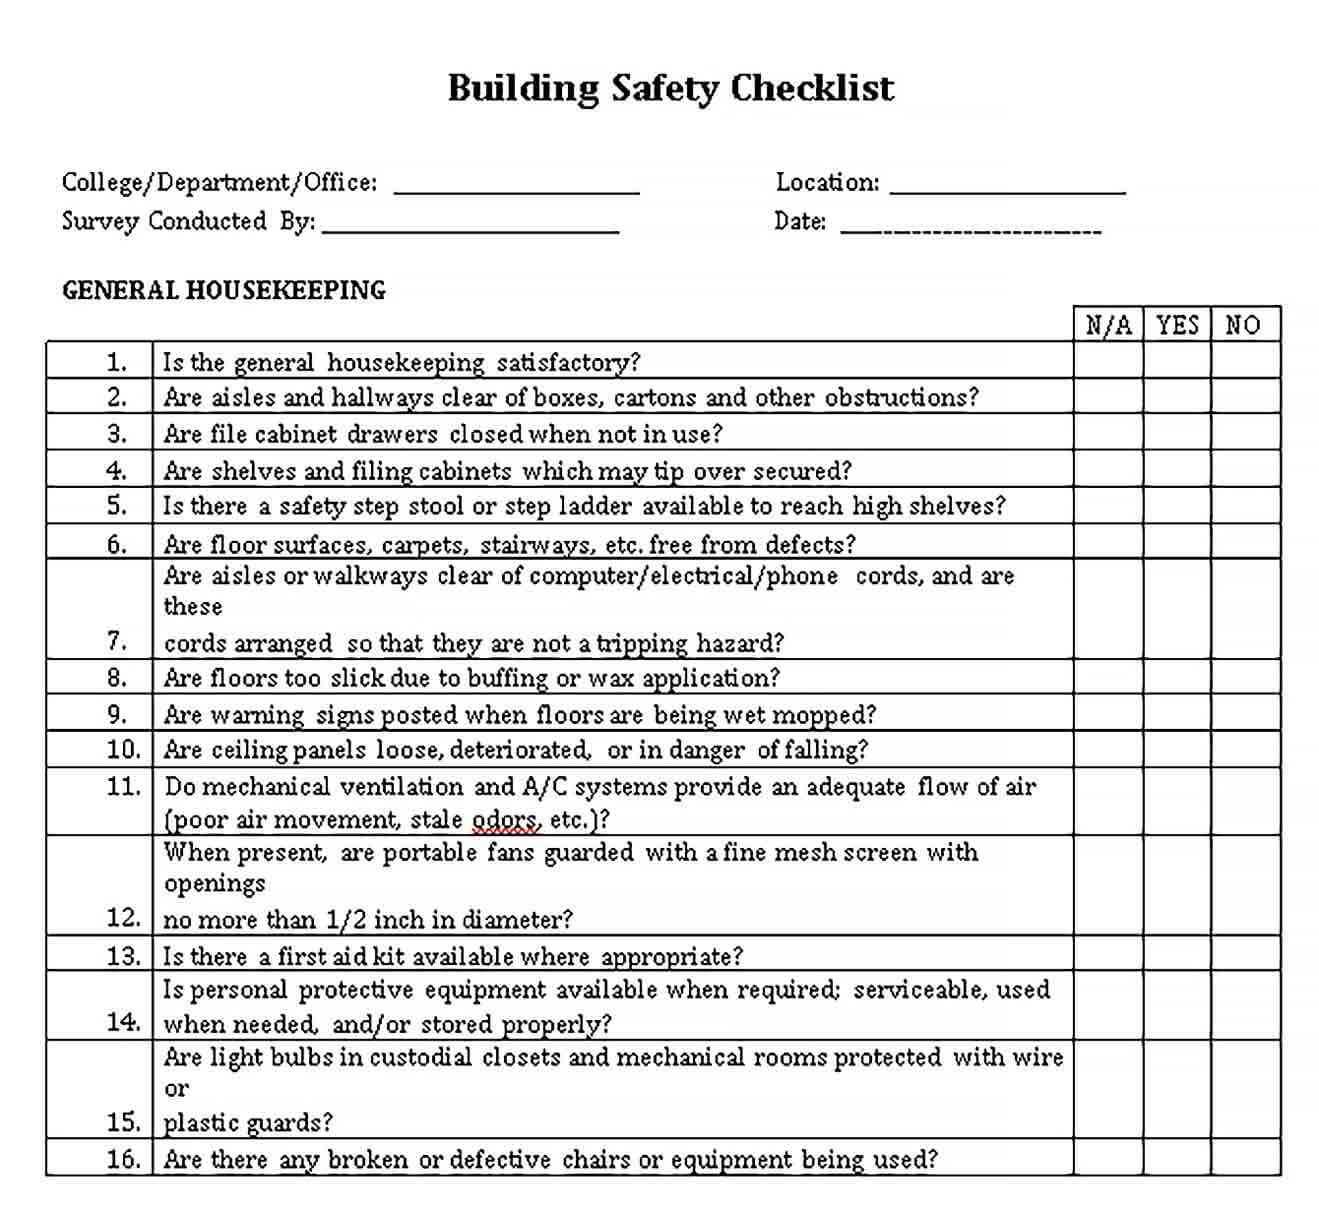 Sample Building Safety Checklist